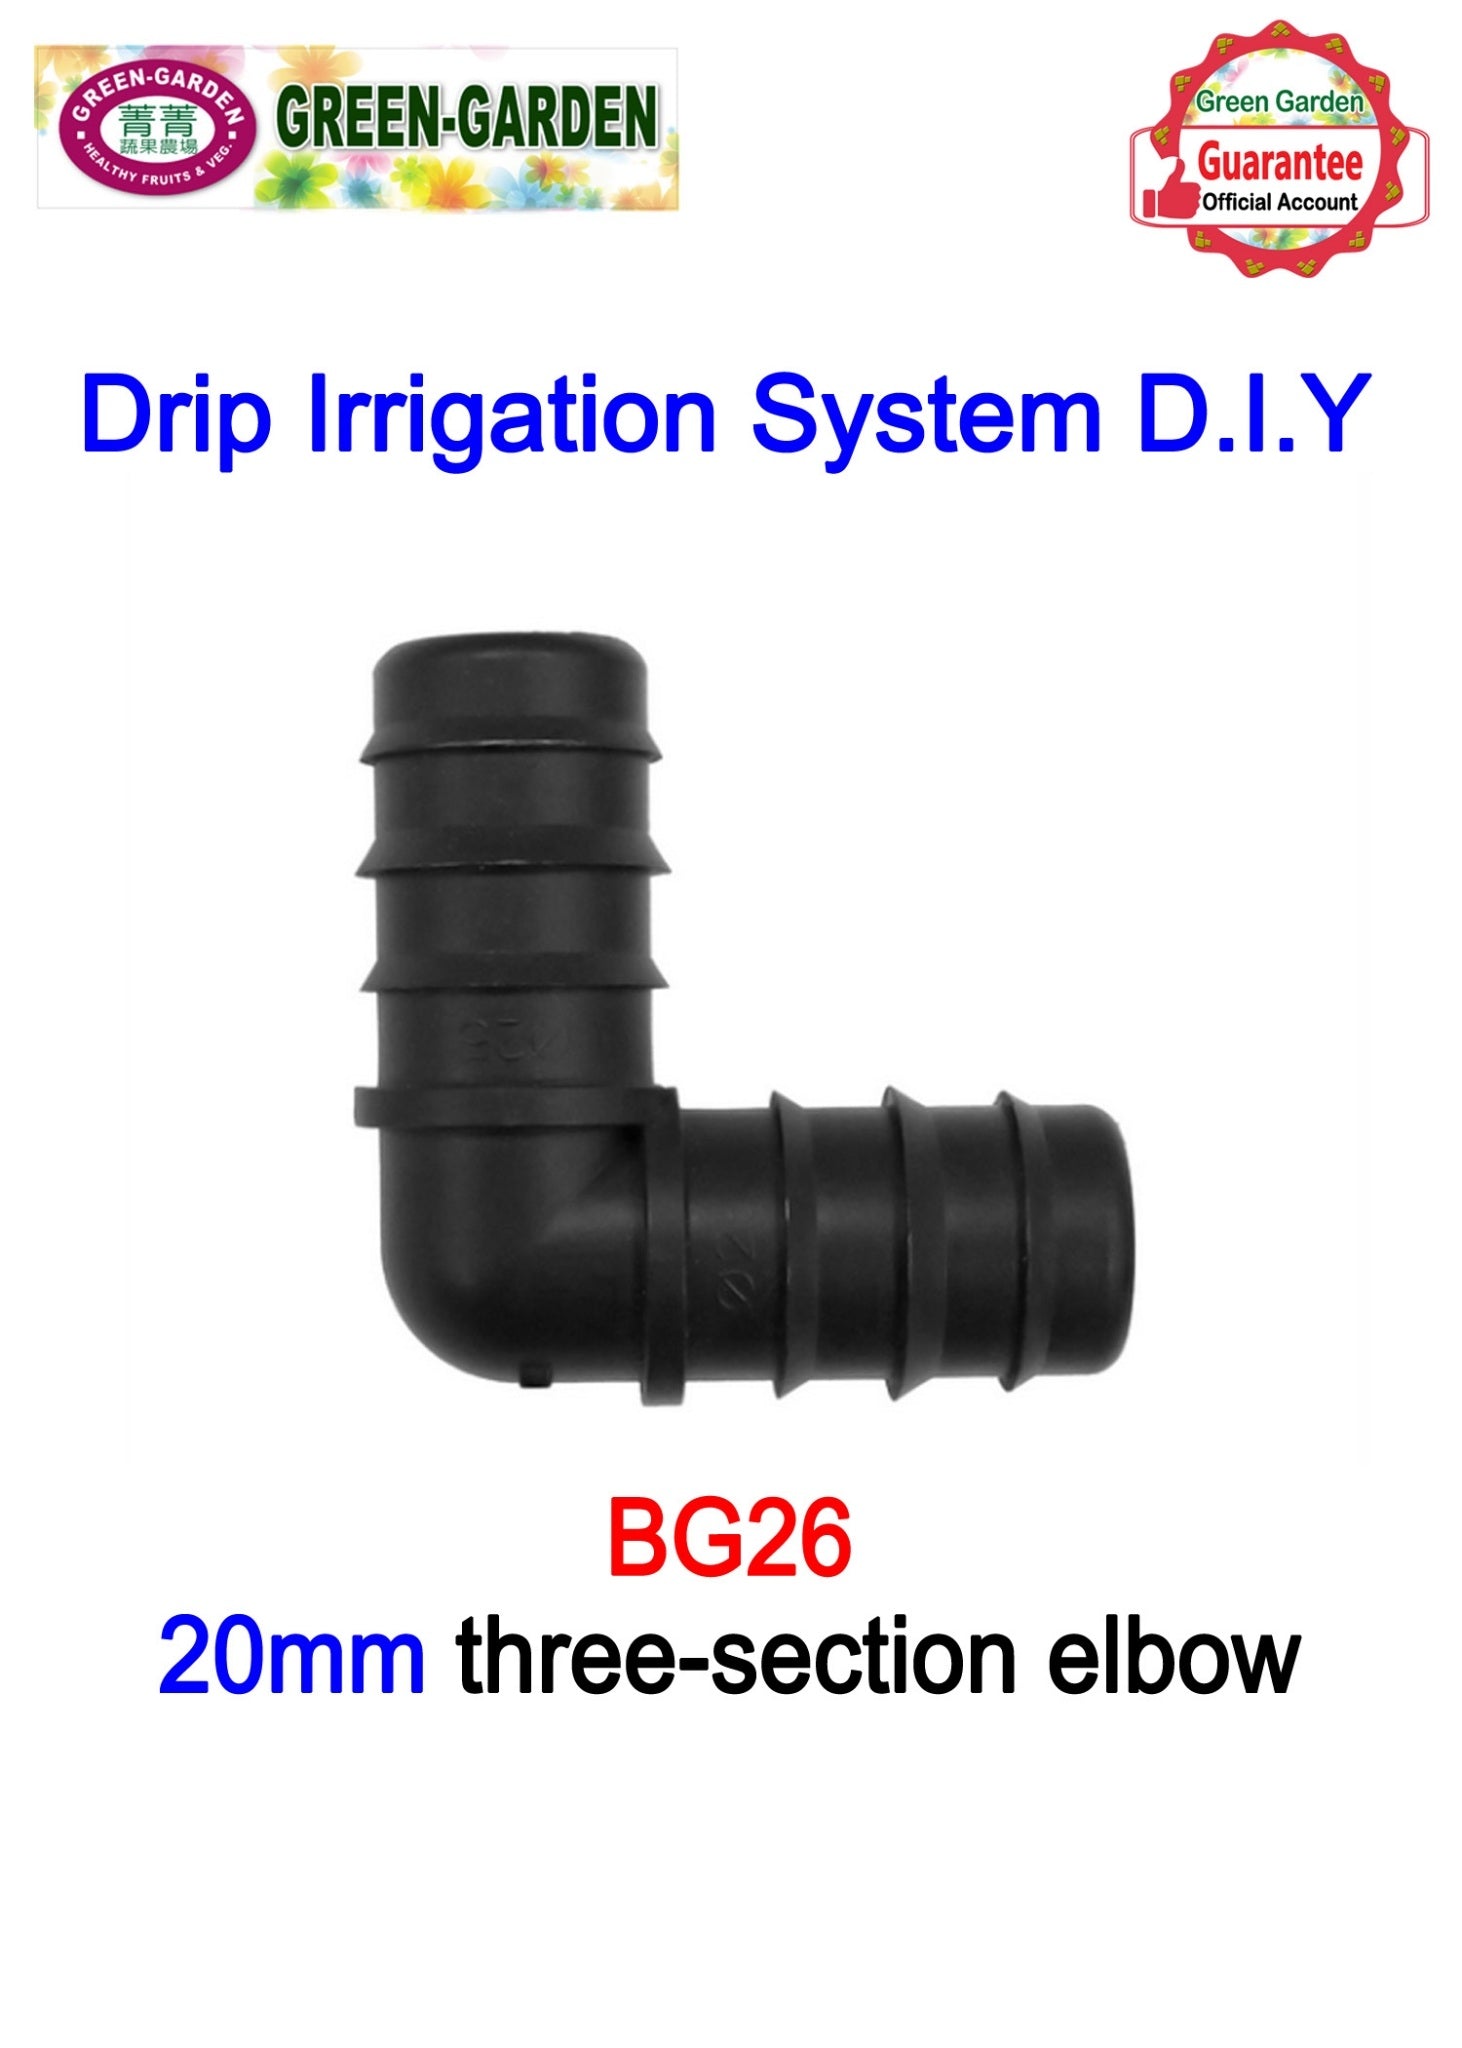 Drip Irrigation System - 20mm three-section elbow (2pcs) BG26